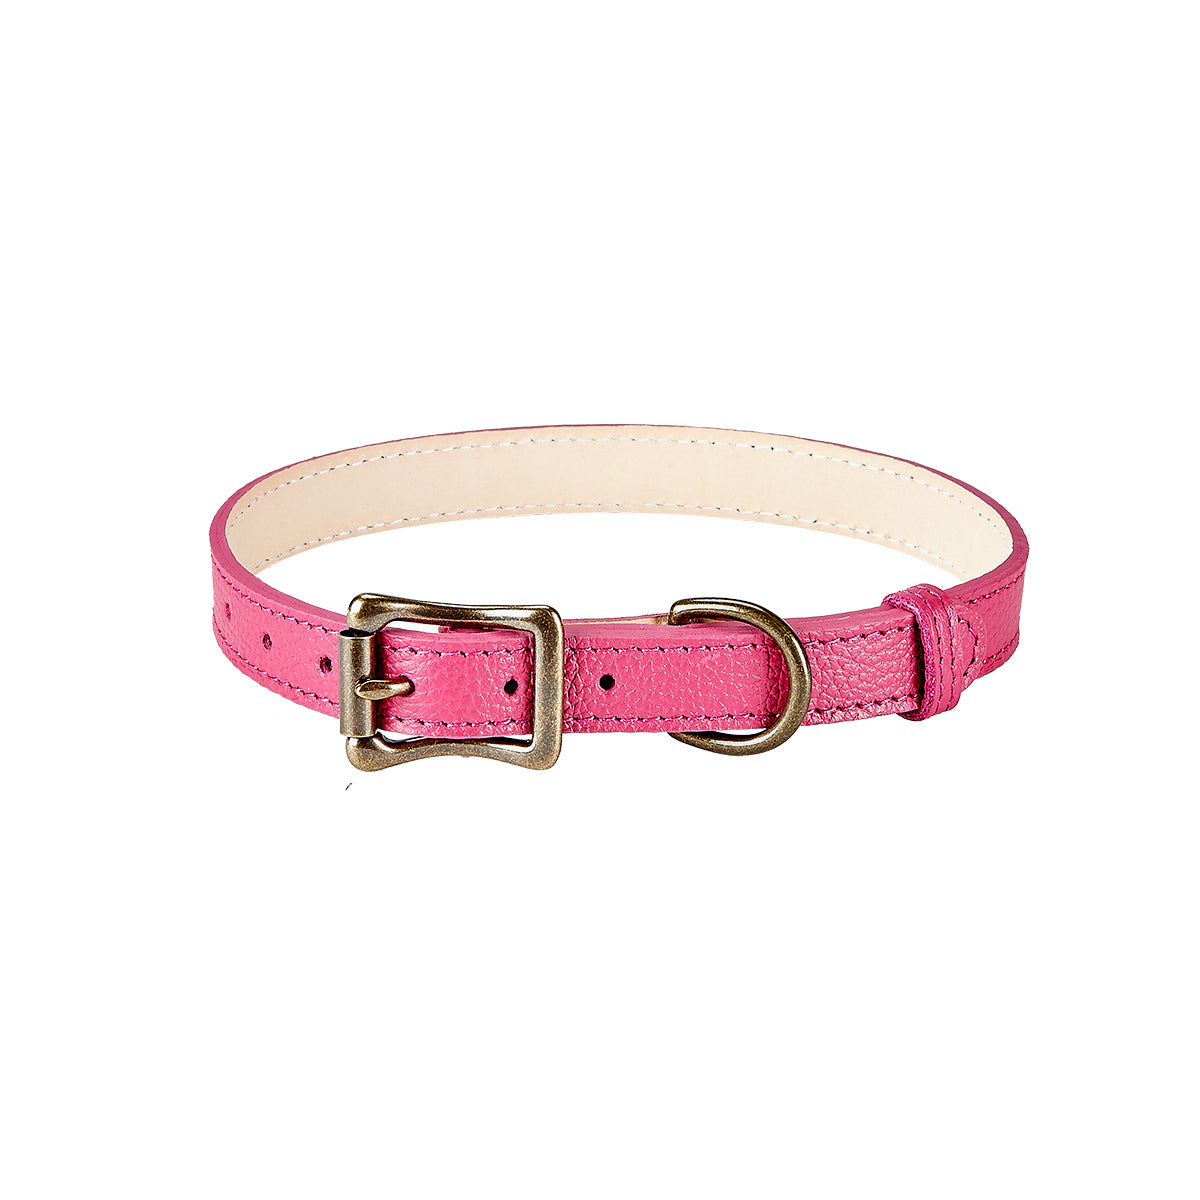 Graphic Image Medium Dog Collar Pink Pebble Grain Leather